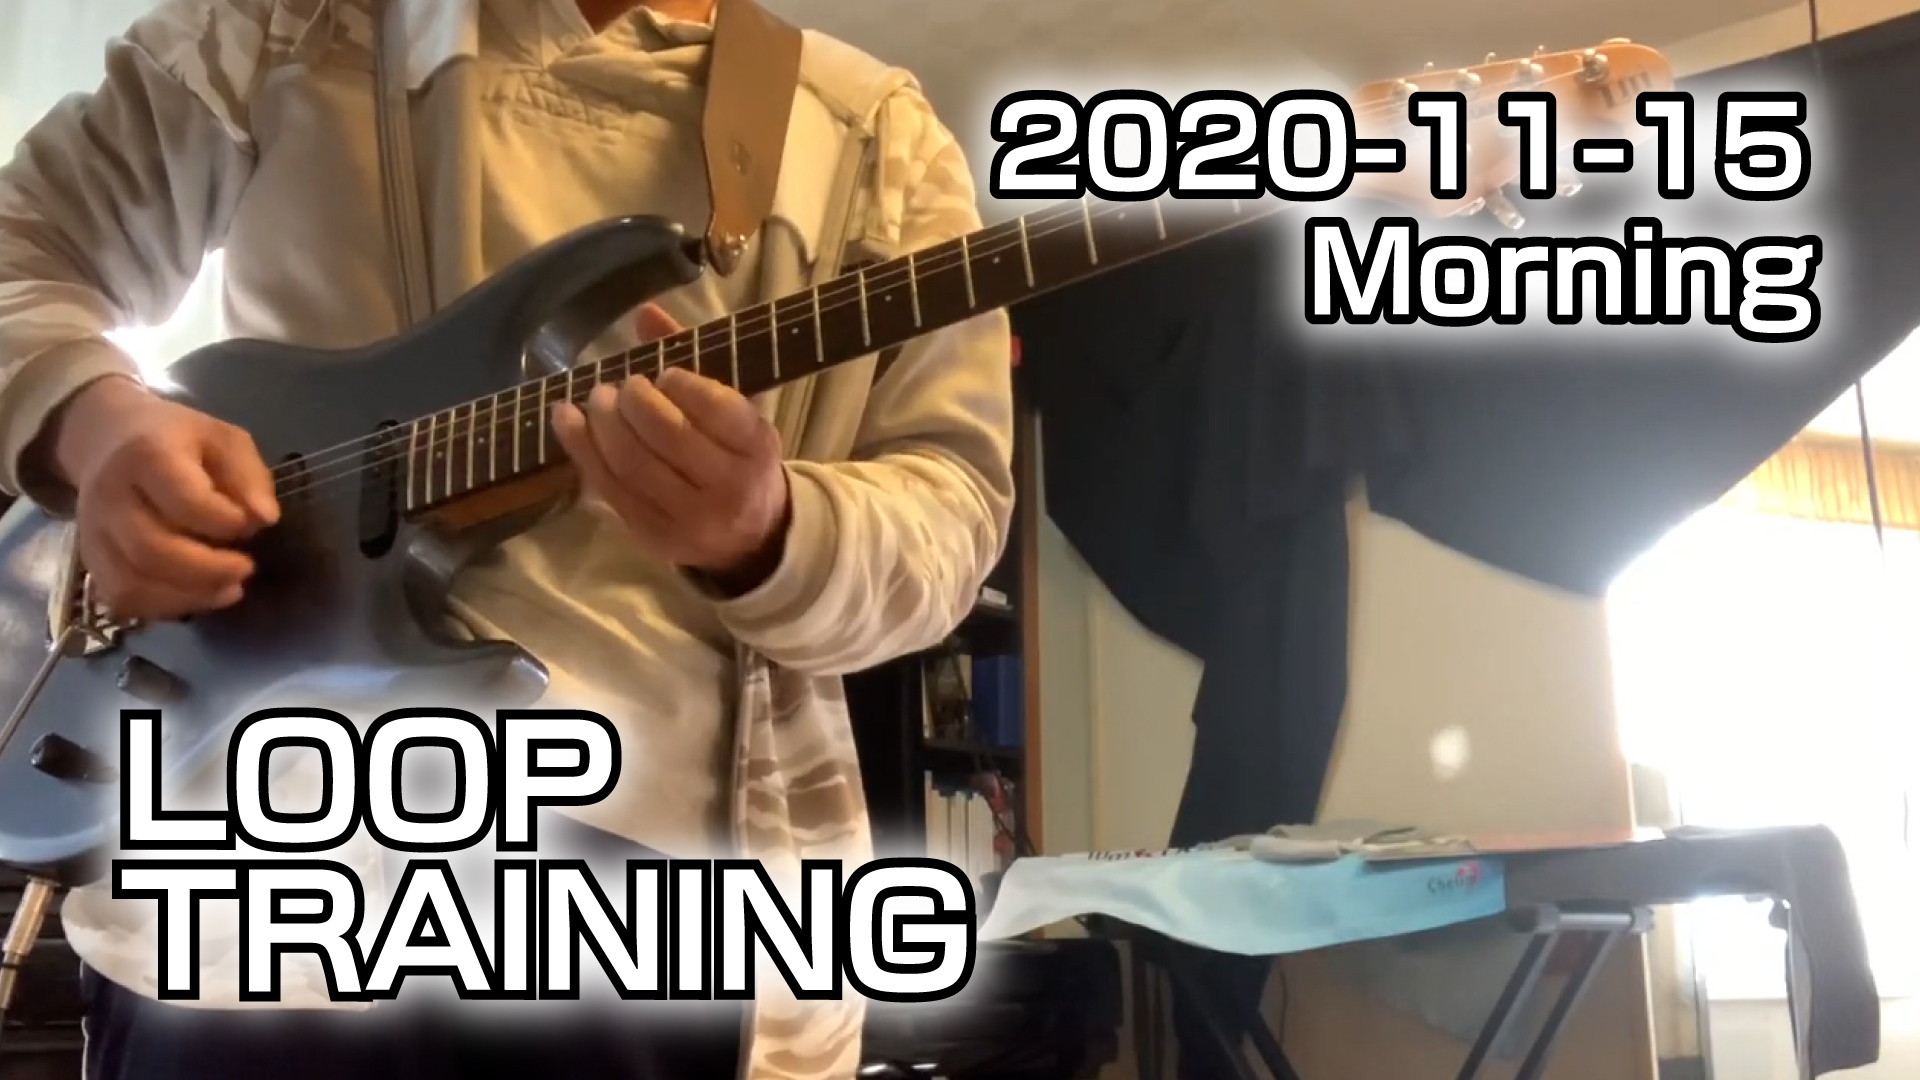 LOOP Training 2020-11-15 Morning